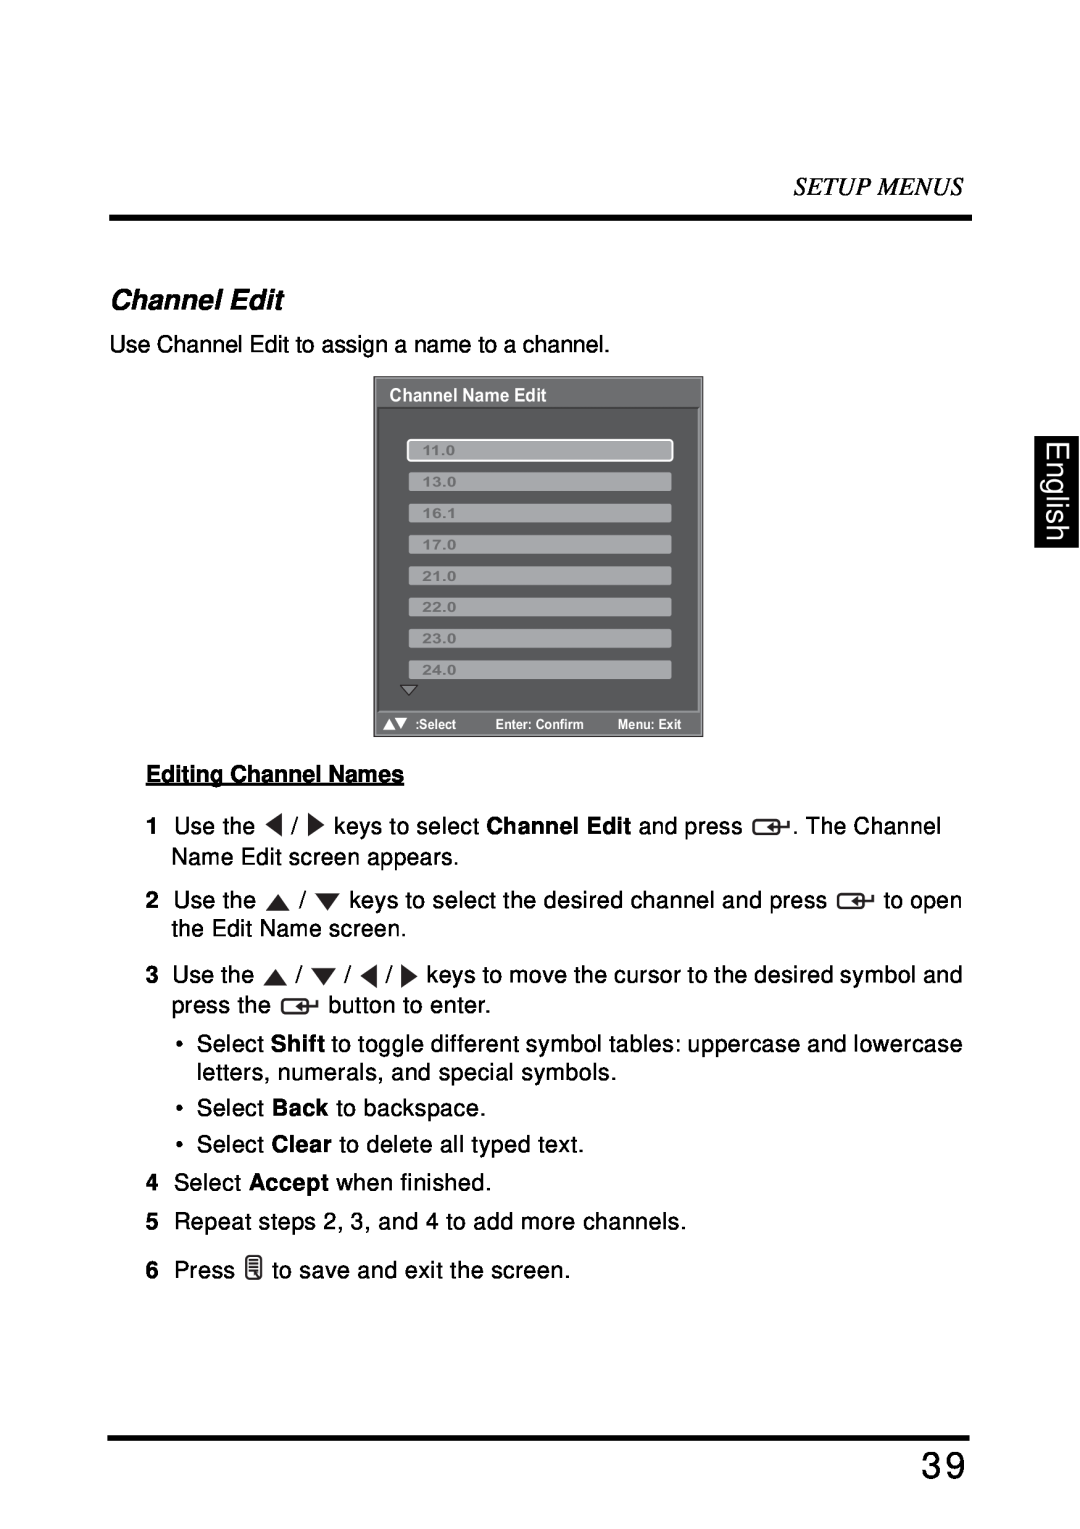 Westinghouse LD-4680 user manual Channel Edit, English, Setup Menus, Editing Channel Names 